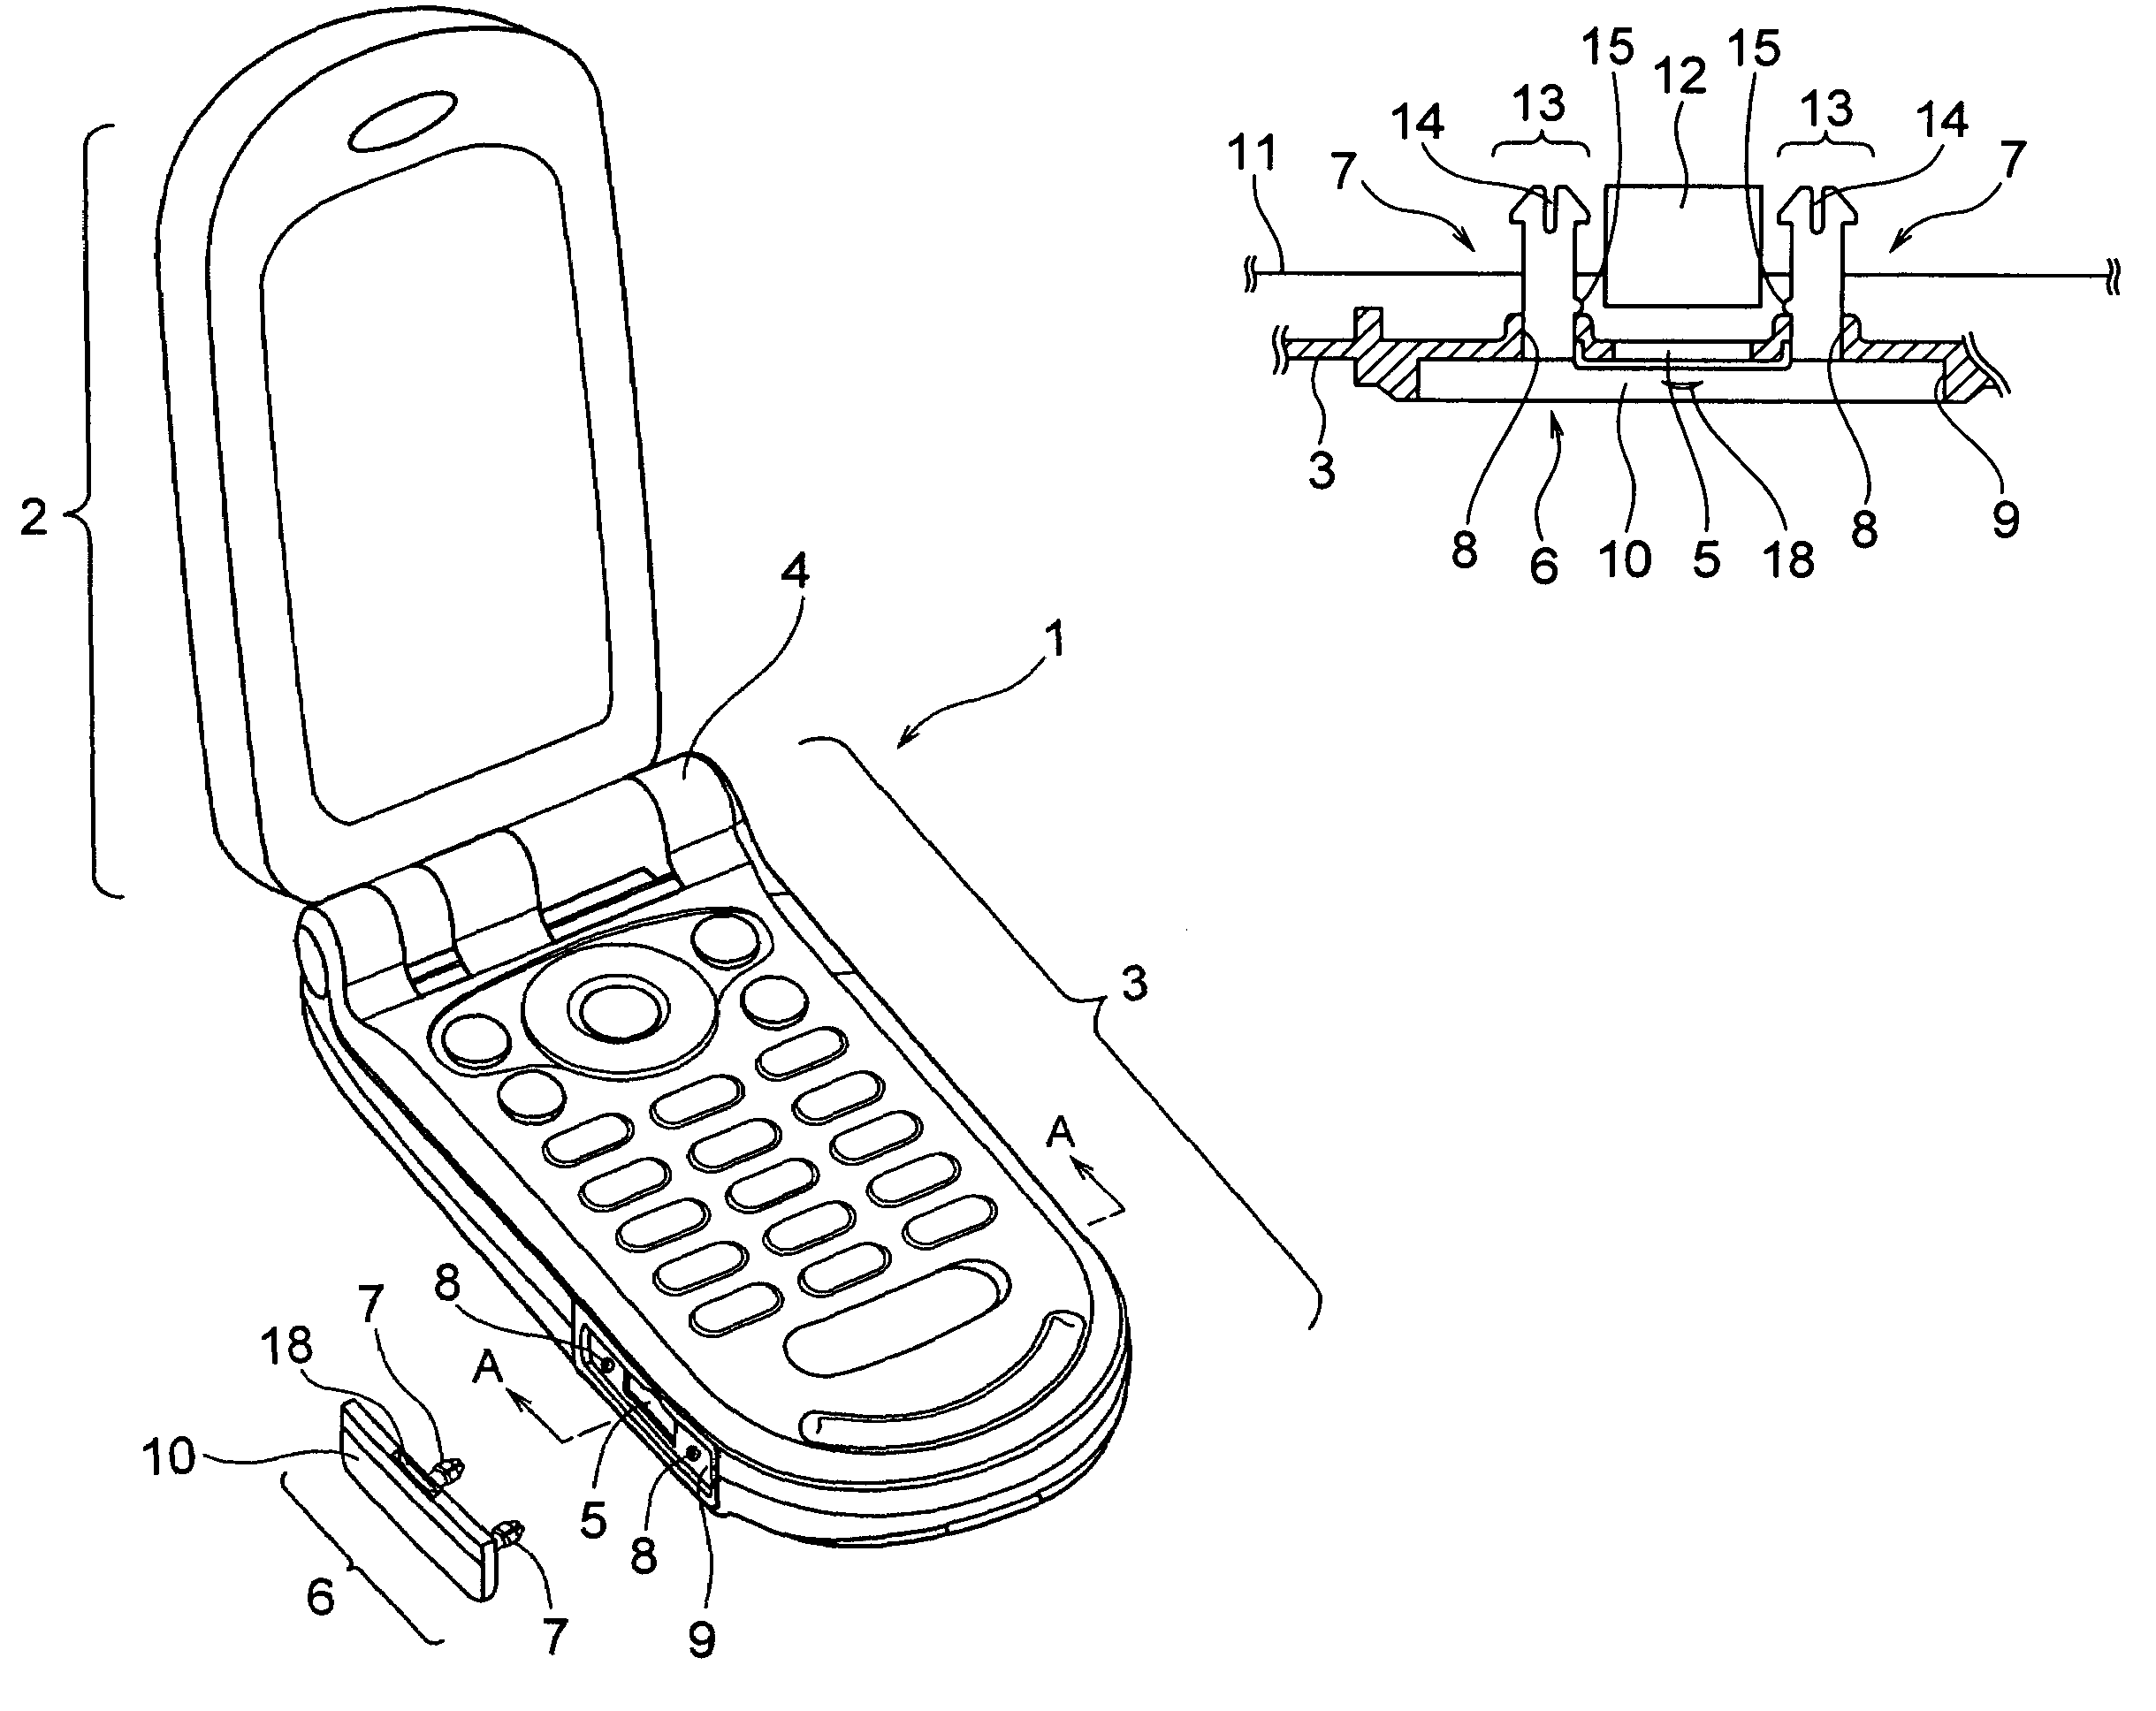 Connector cover for portable terminal